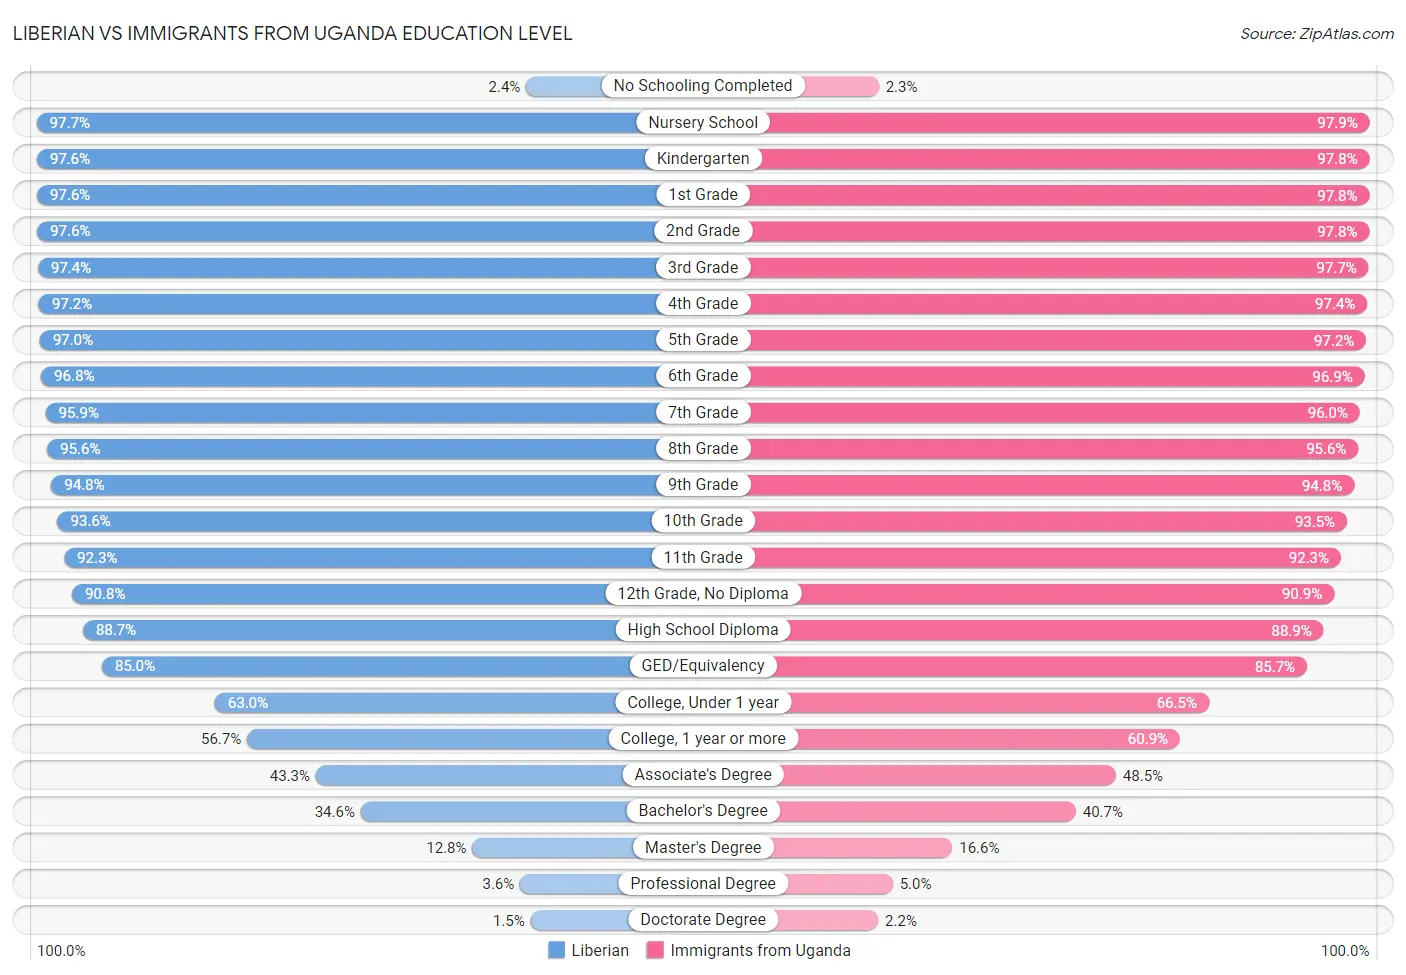 Liberian vs Immigrants from Uganda Education Level